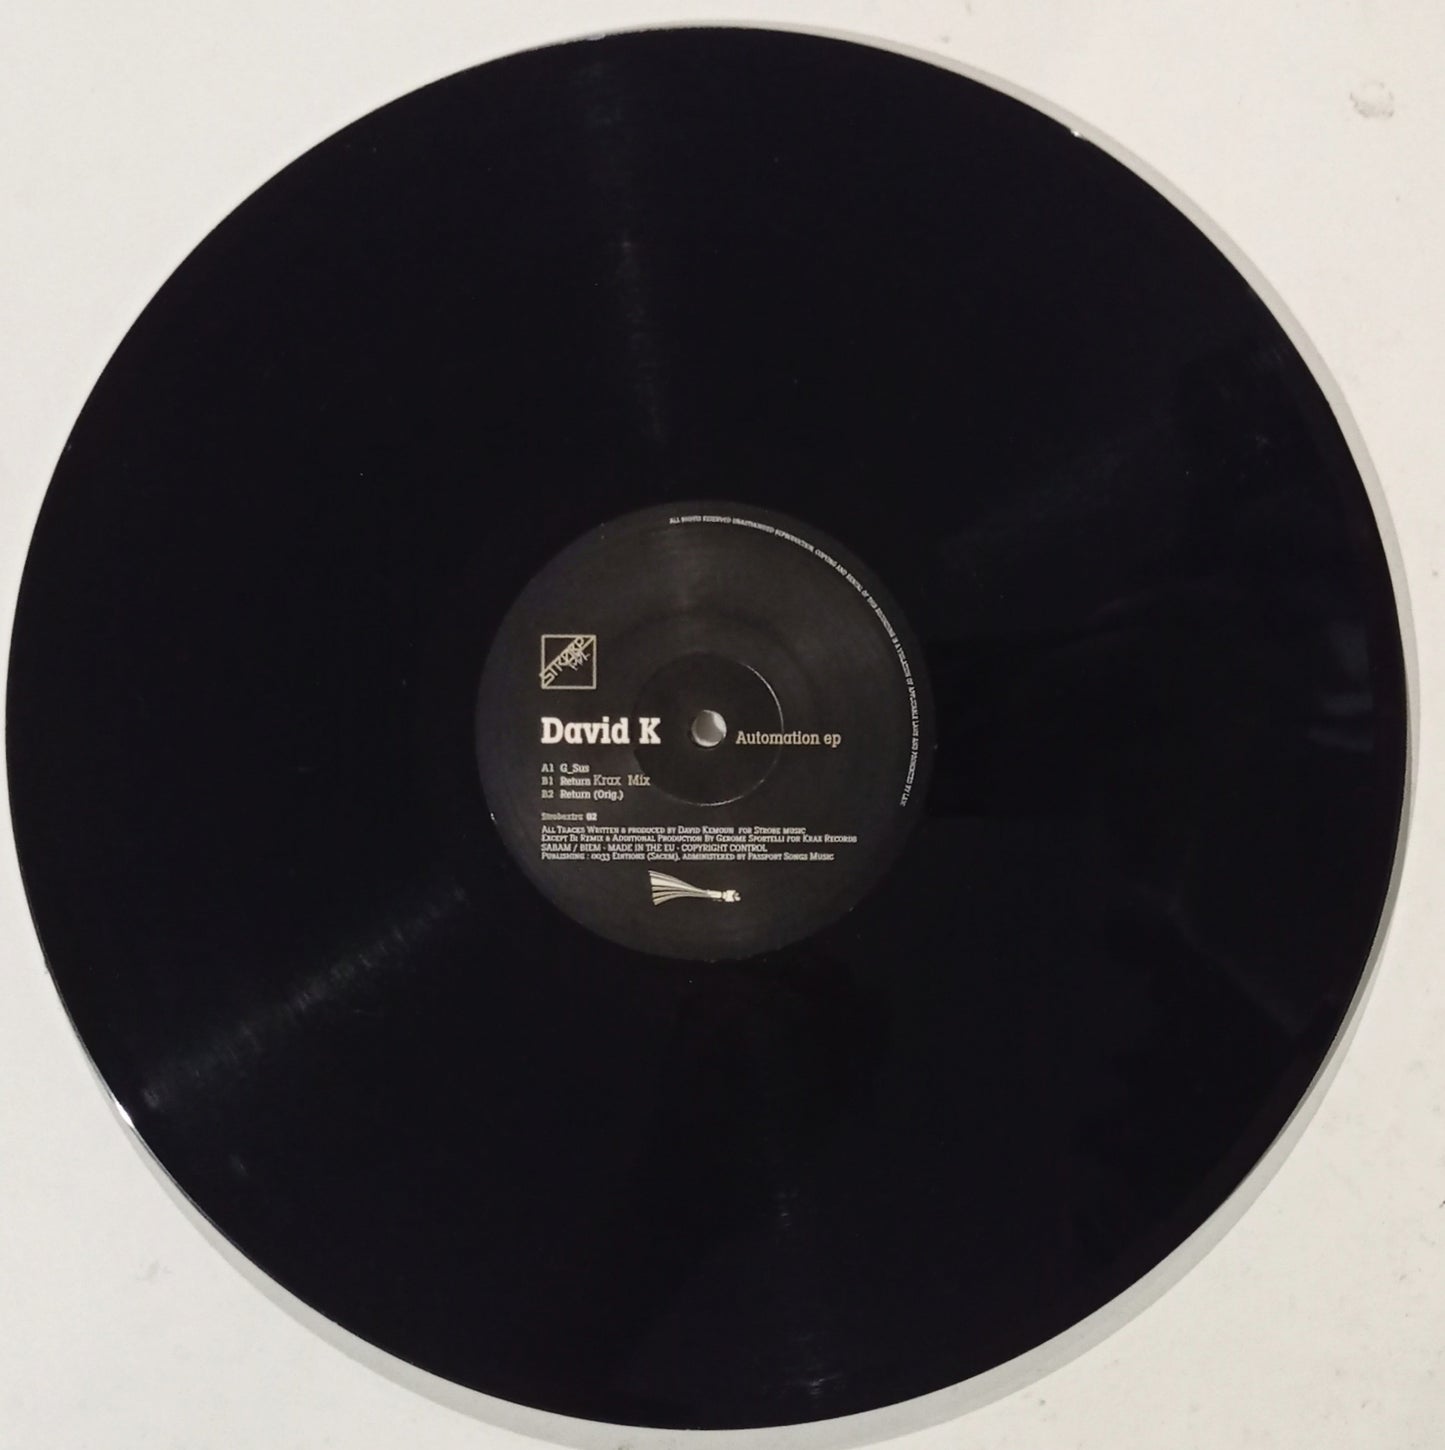 David K - Automation EP (Vinyl 12" - Importado Bélgica - USADO)